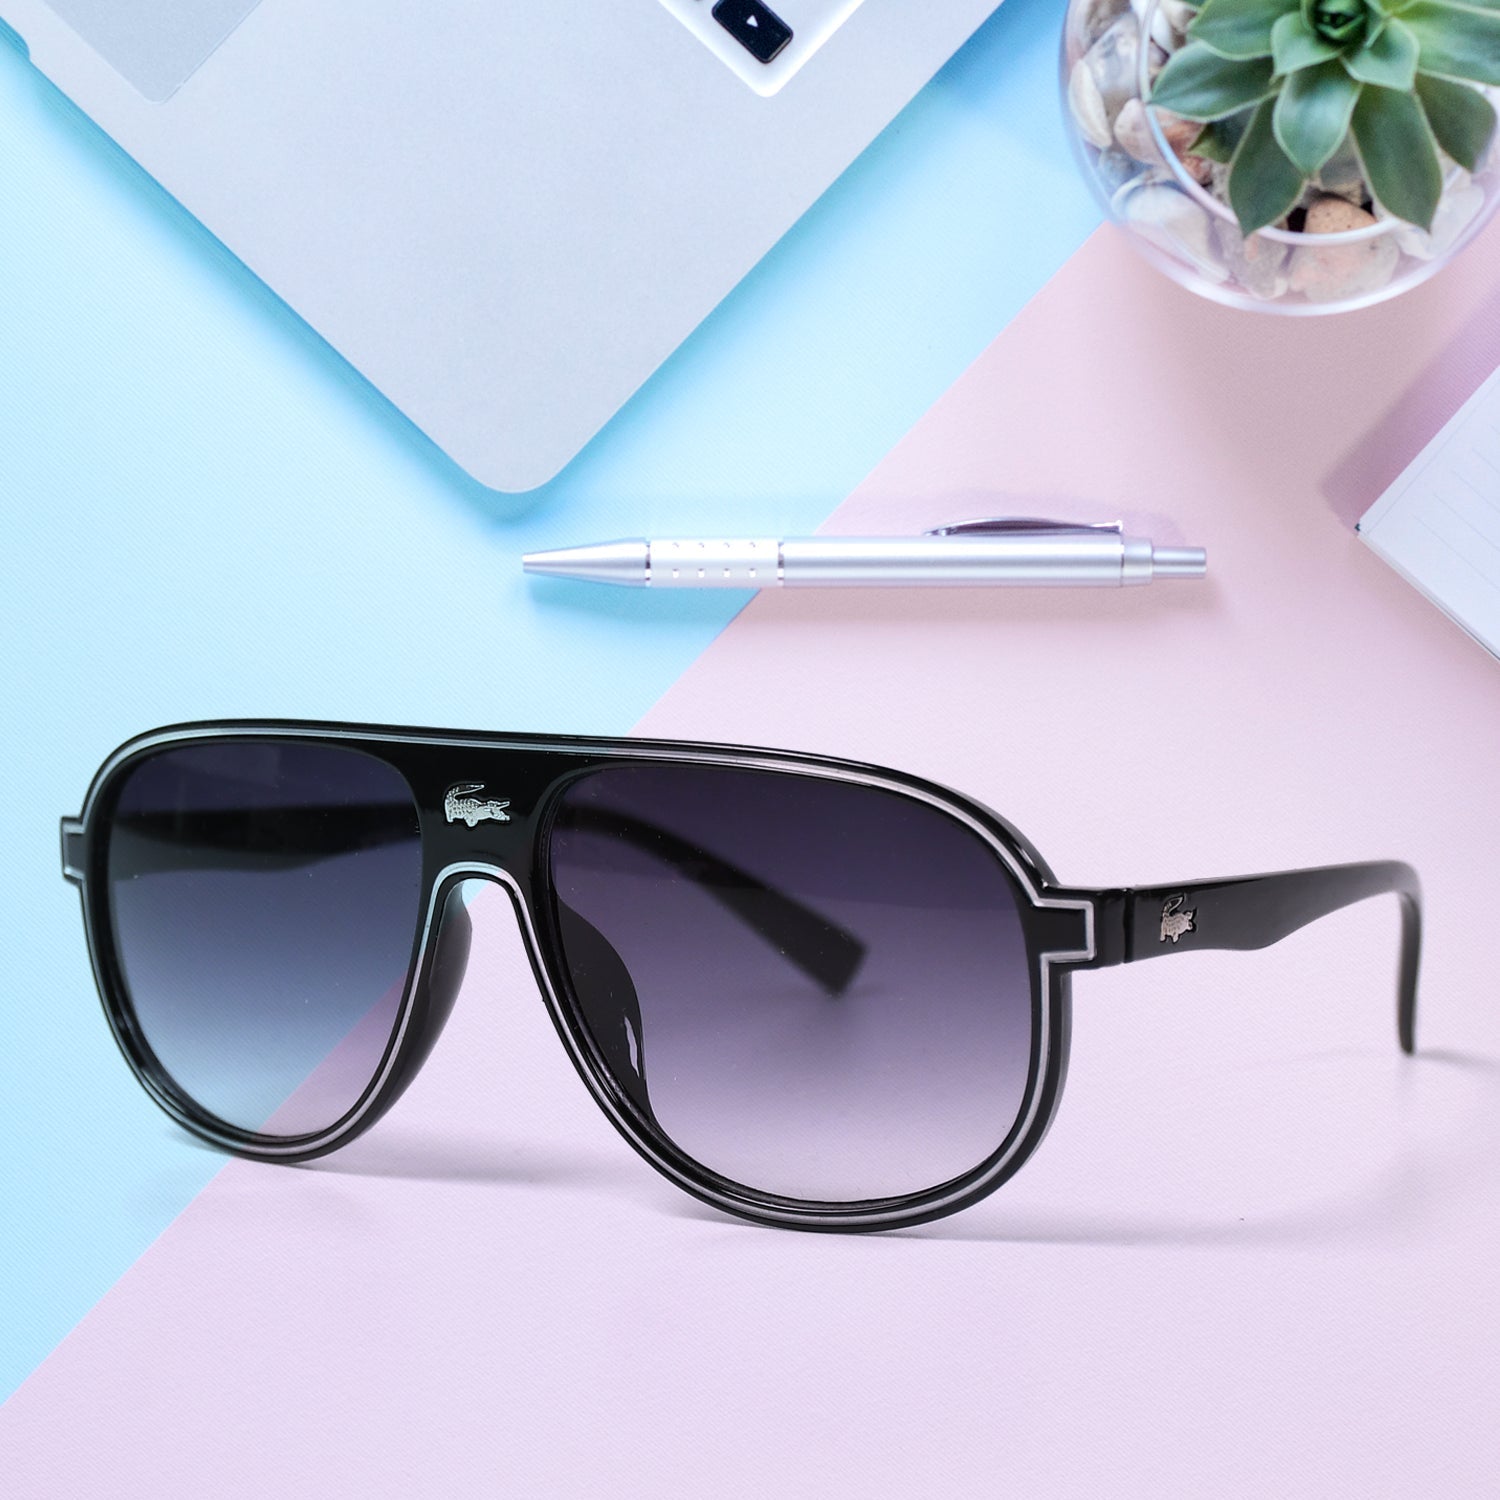 1181 Fashion Sunglasses Full Rim Wayfarer Branded Latest and Stylish Sunglasses | Polarized and 100% UV Protected | Men Sunglasses DeoDap